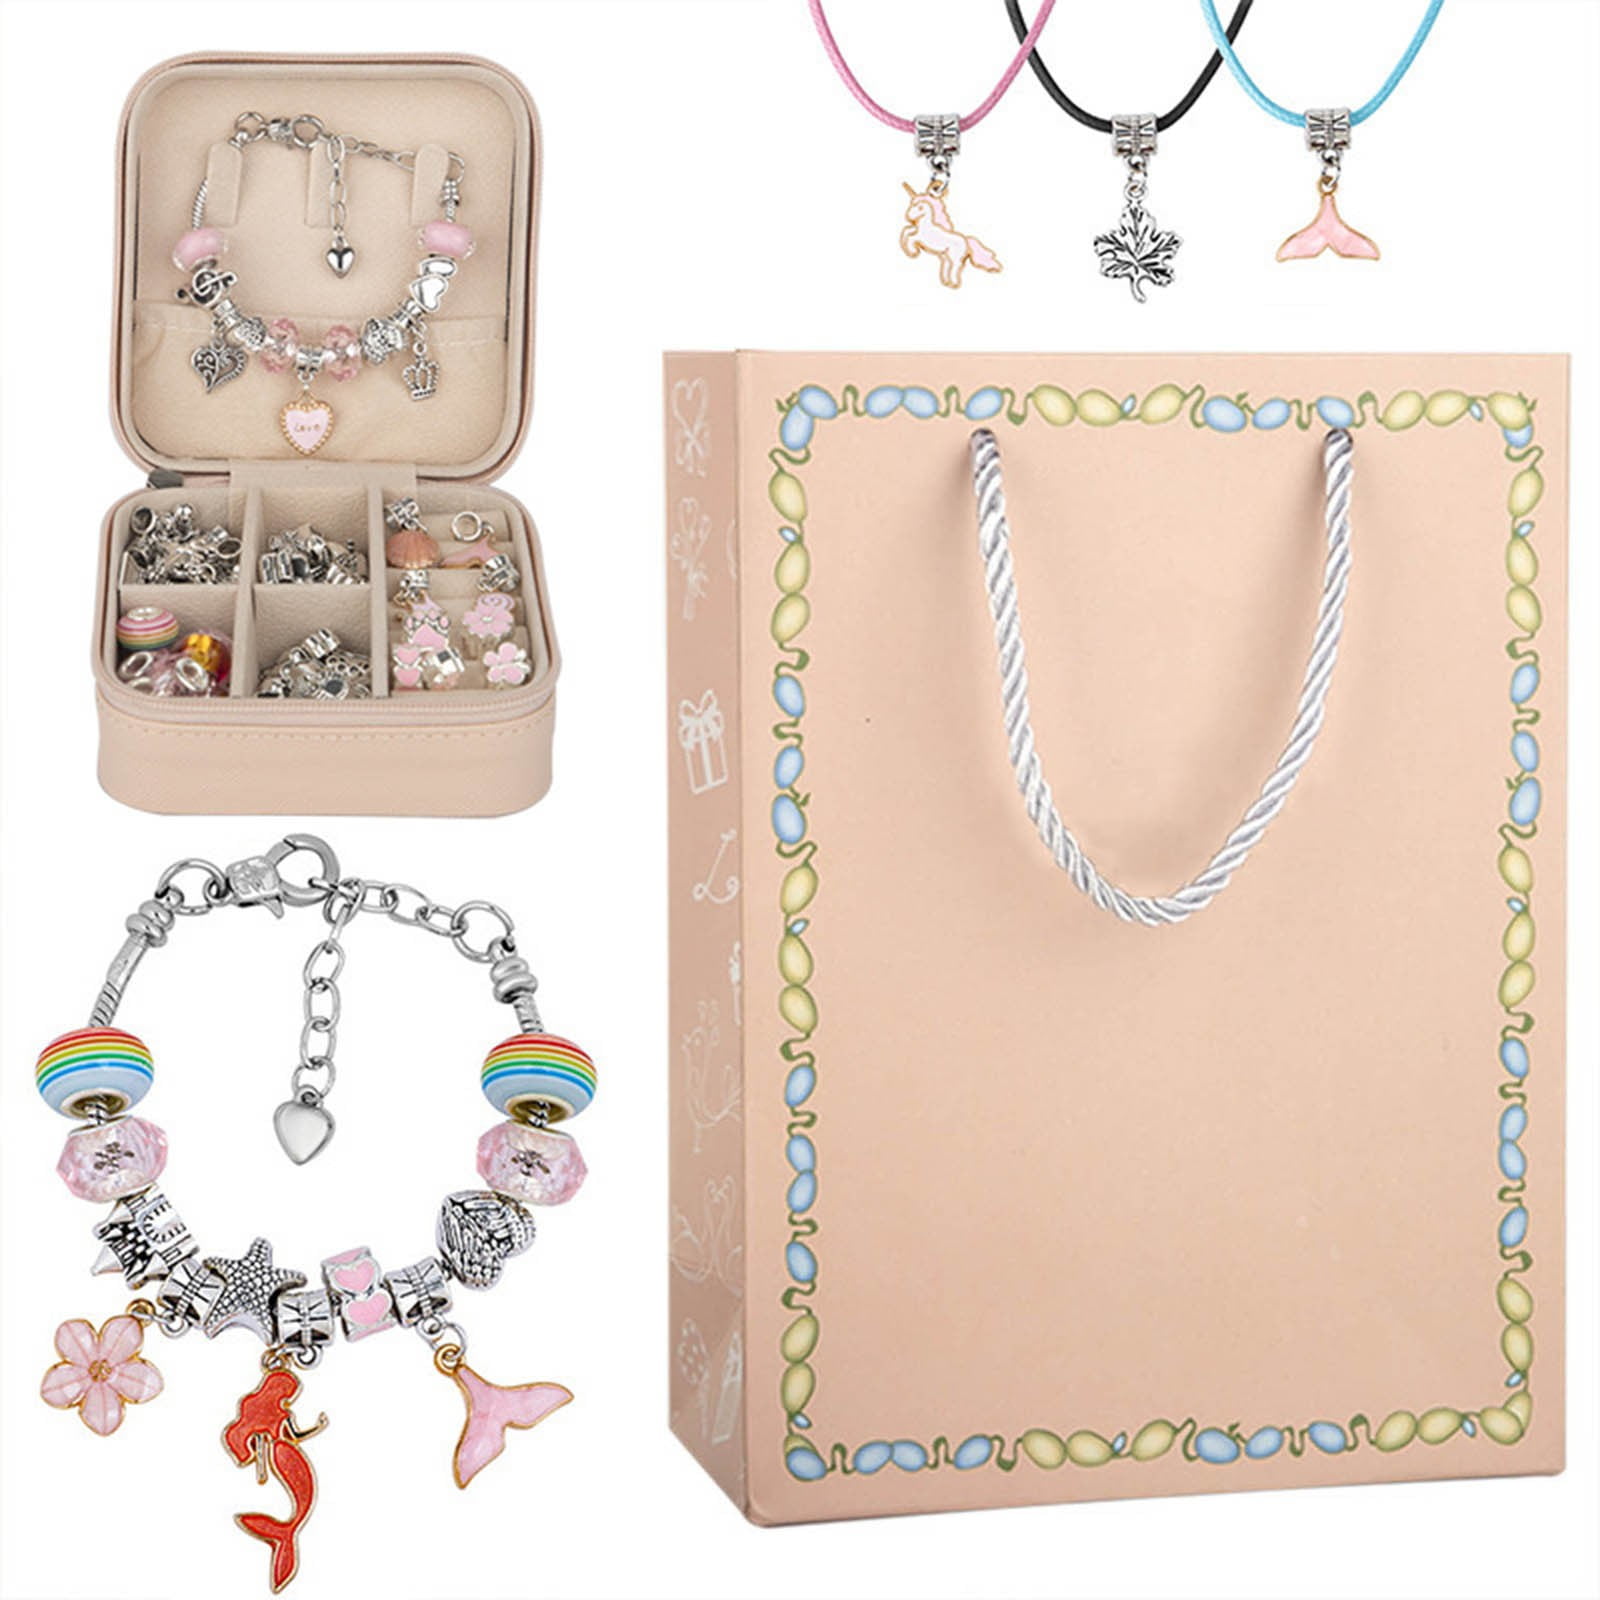  Athena's Elements Charm Bracelet Making Kit, DIY Jewelry Making  Kit for Girls, 67 pcs Bracelet Charms for Bracelet Making, Art and Crafts  for Girls Ages 7-12 with Jewelry Box (Pink) 